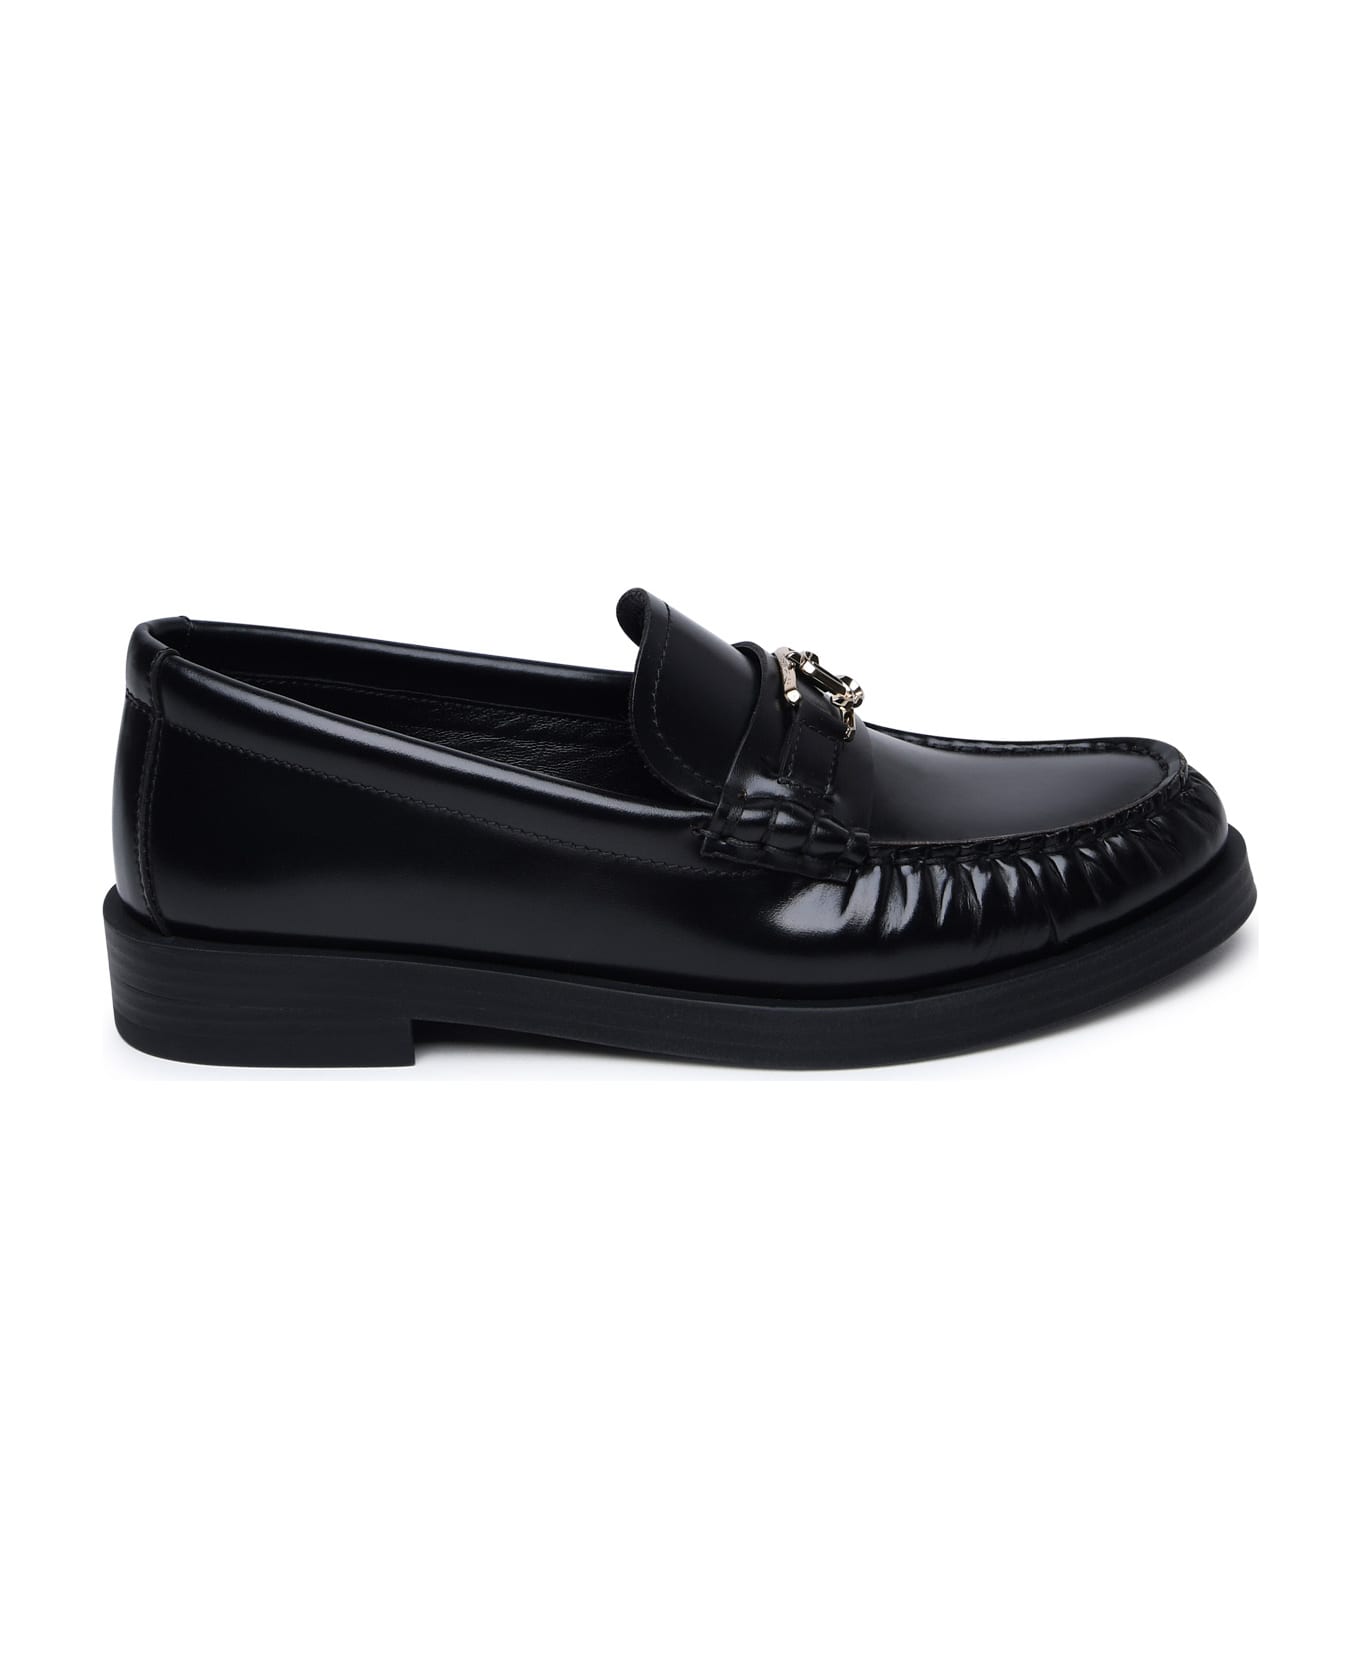 Jimmy Choo Black Leather Loafers - Black フラットシューズ